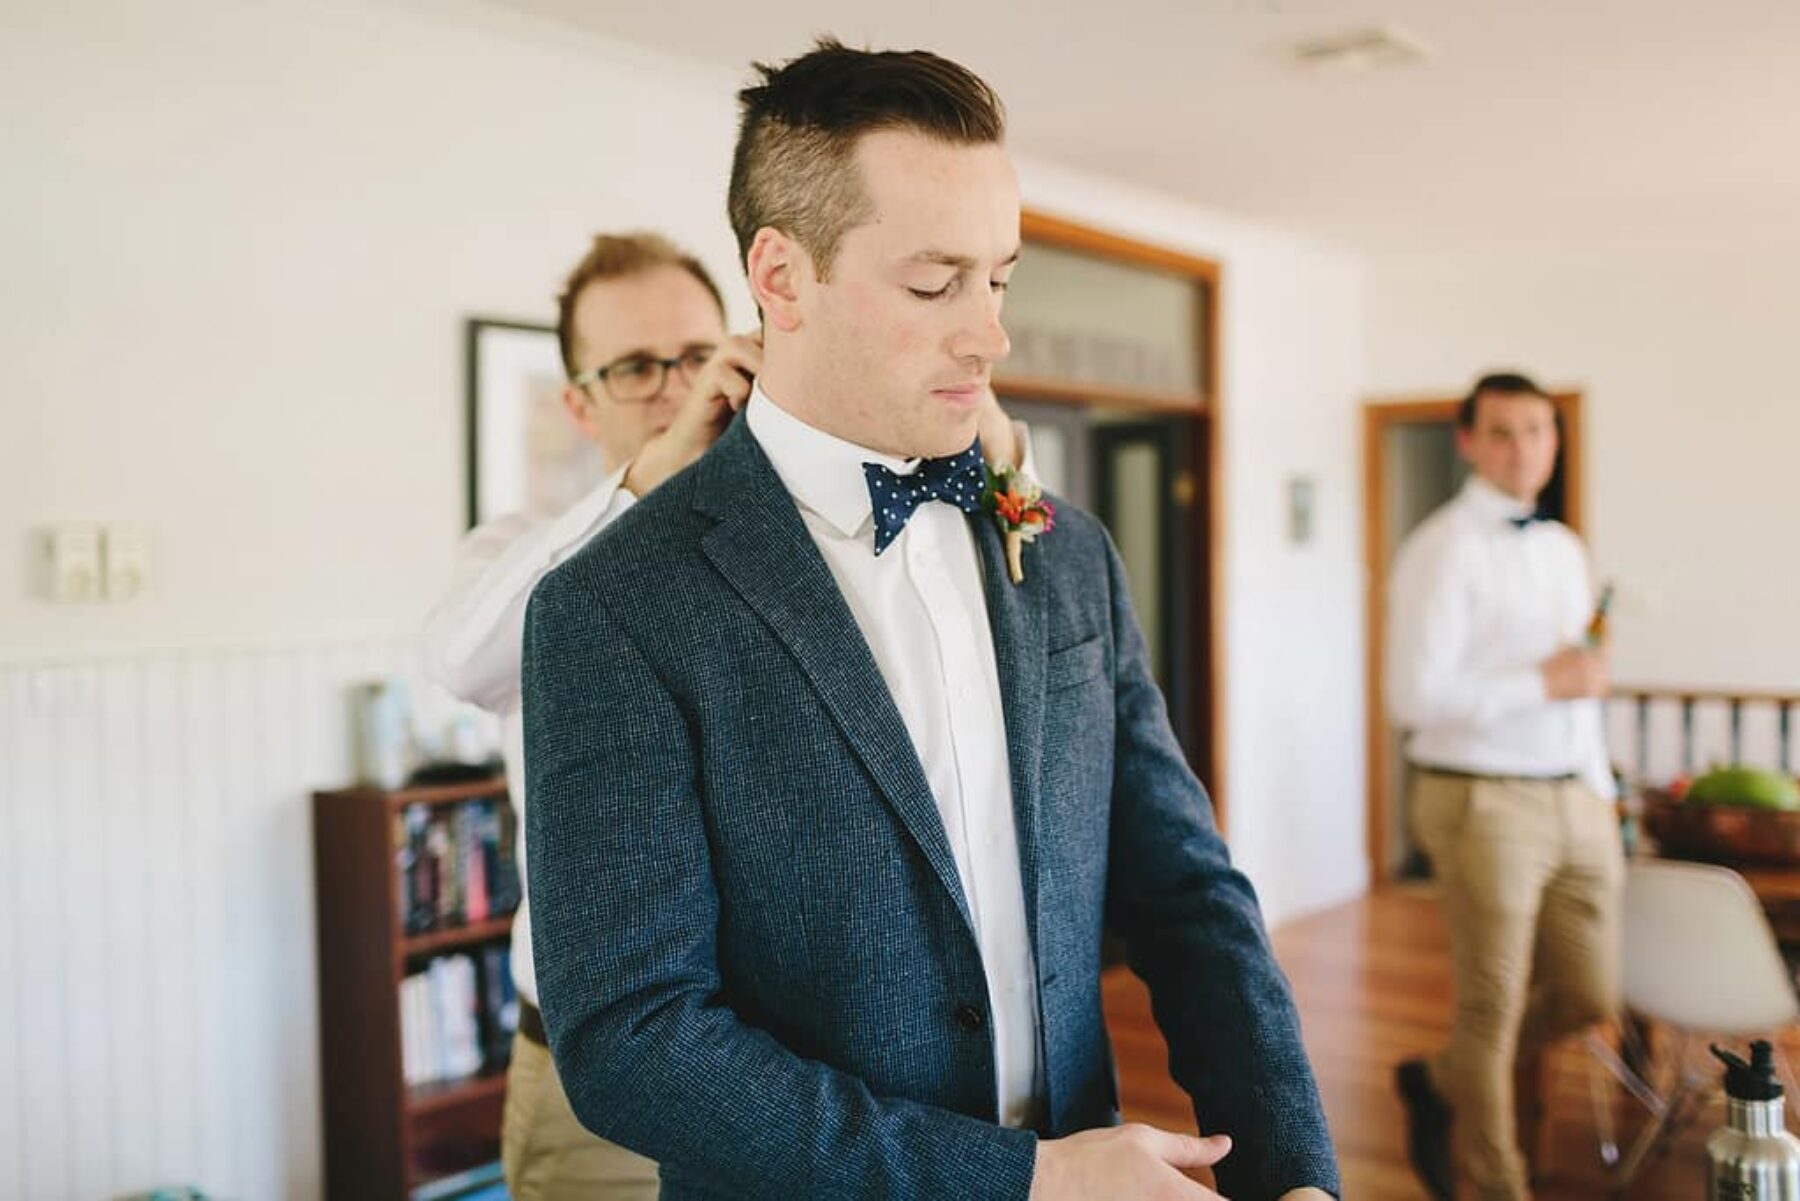 dapper groom with polka dot bow tie